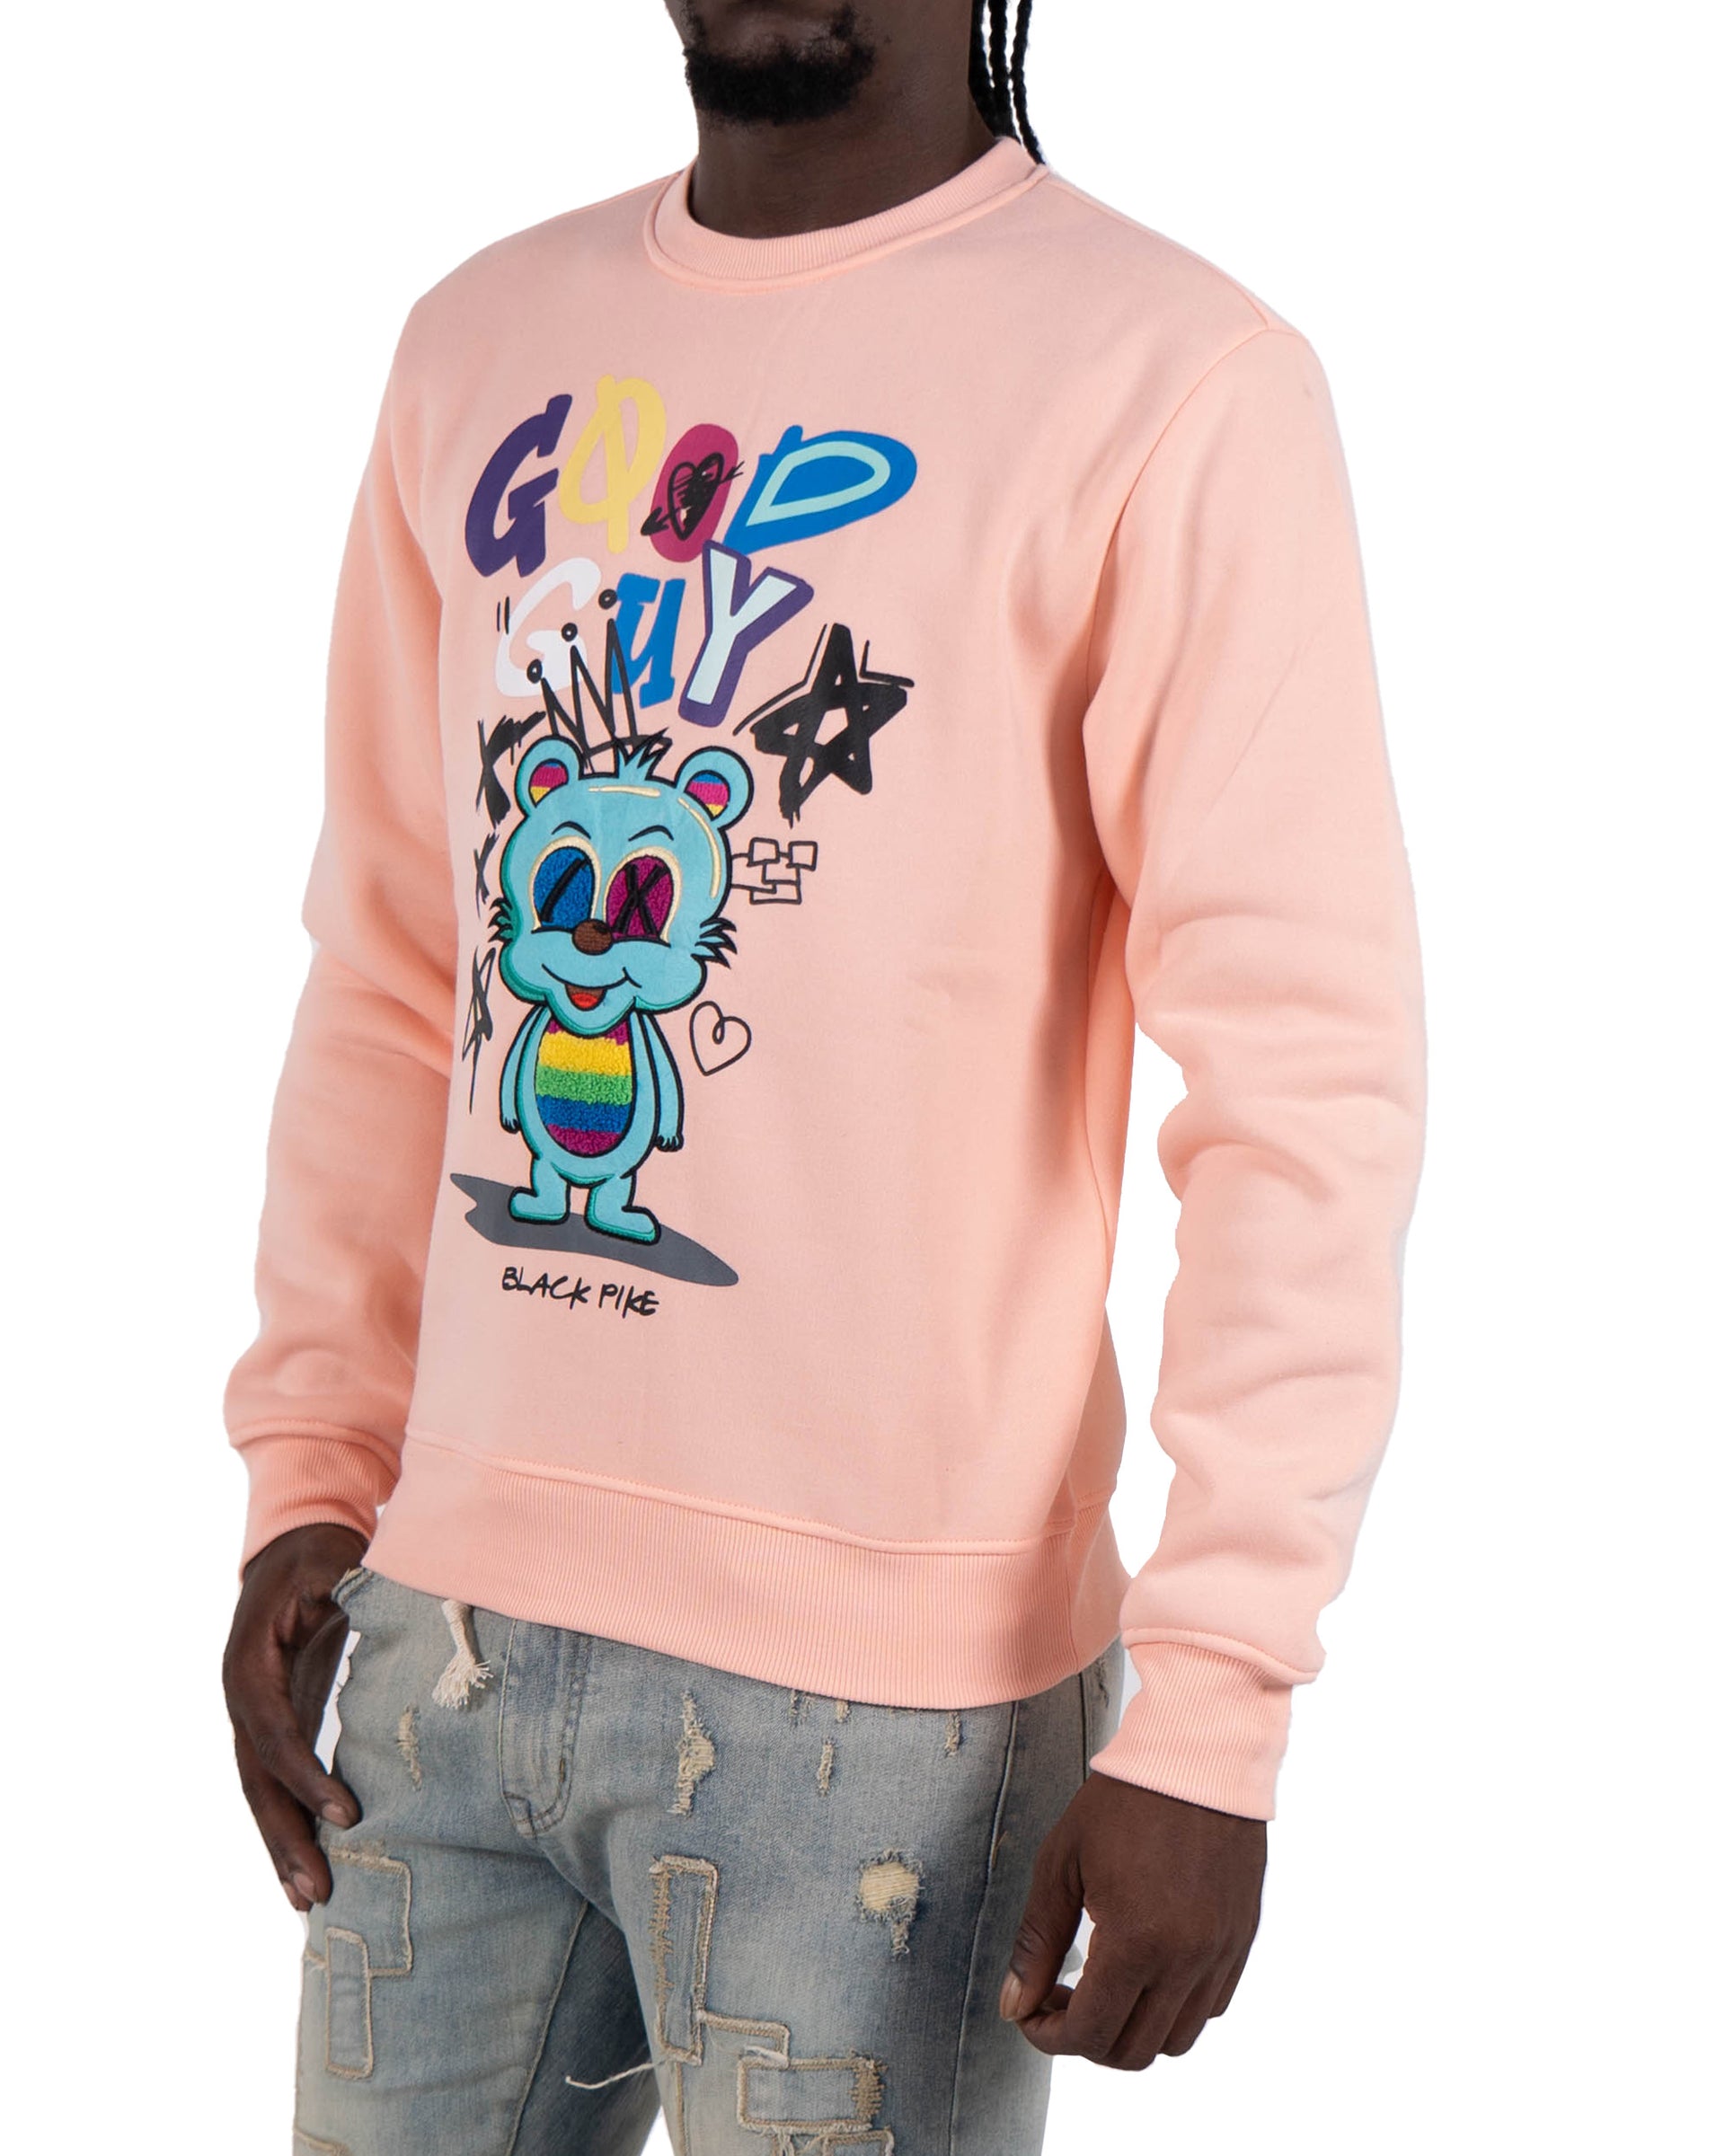 Men's "Good Guy" Graphic Embroidered Sweatshirt | Light Pink